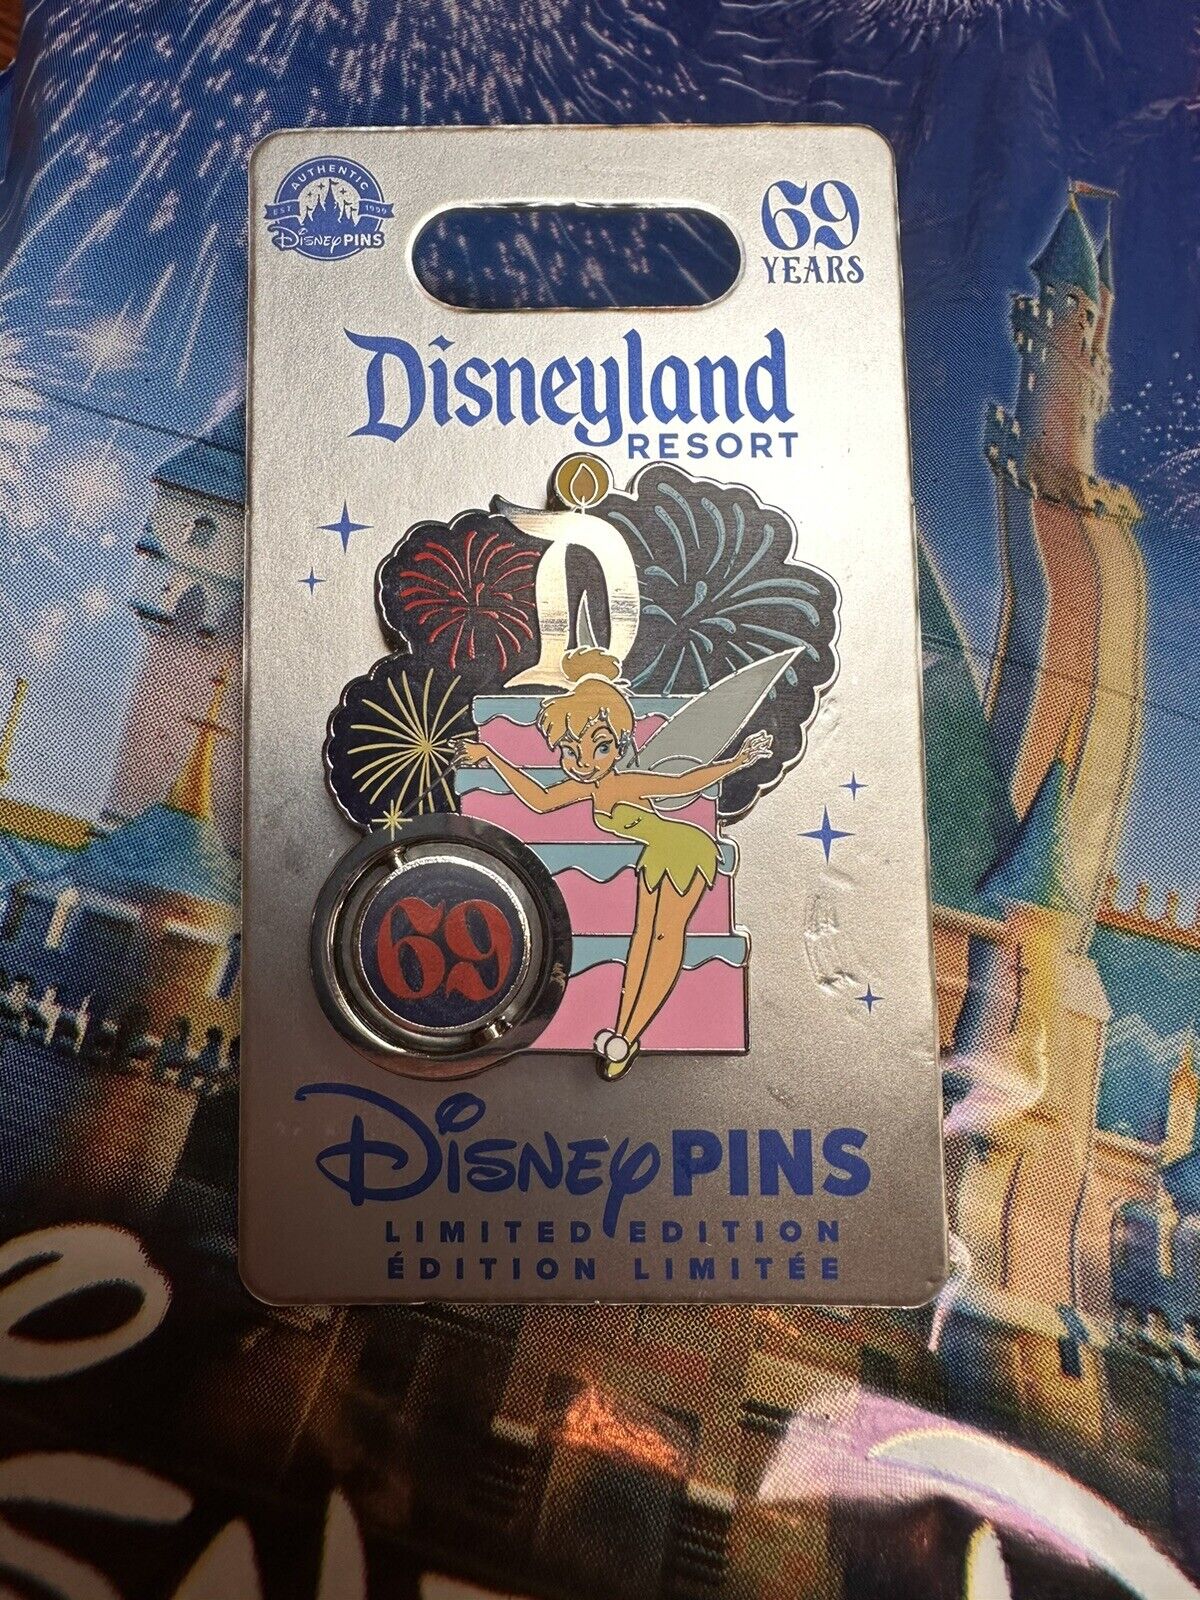 Disneyland 69th Birthday Anniversary Celebration Tinkerbell Pin LE4000